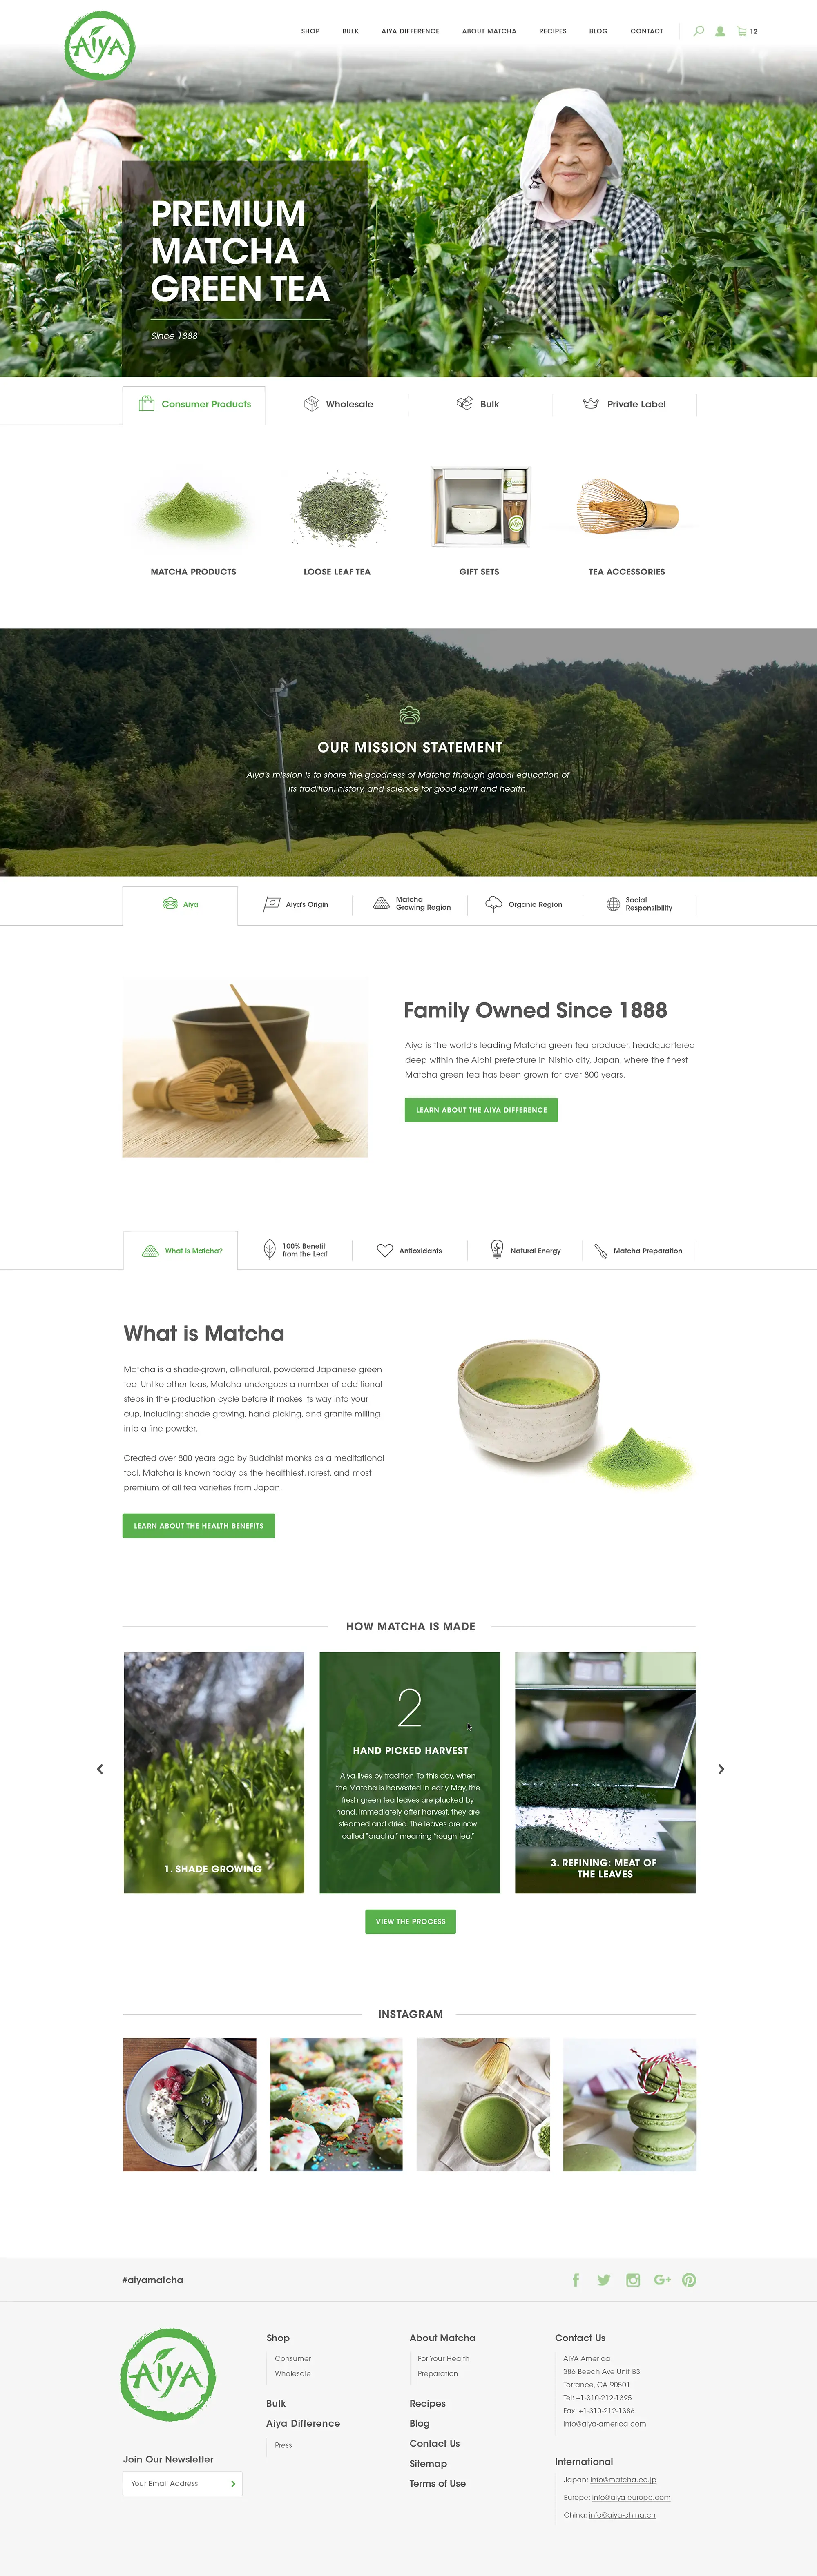 Aiya Macha Tea Website Design Case Study